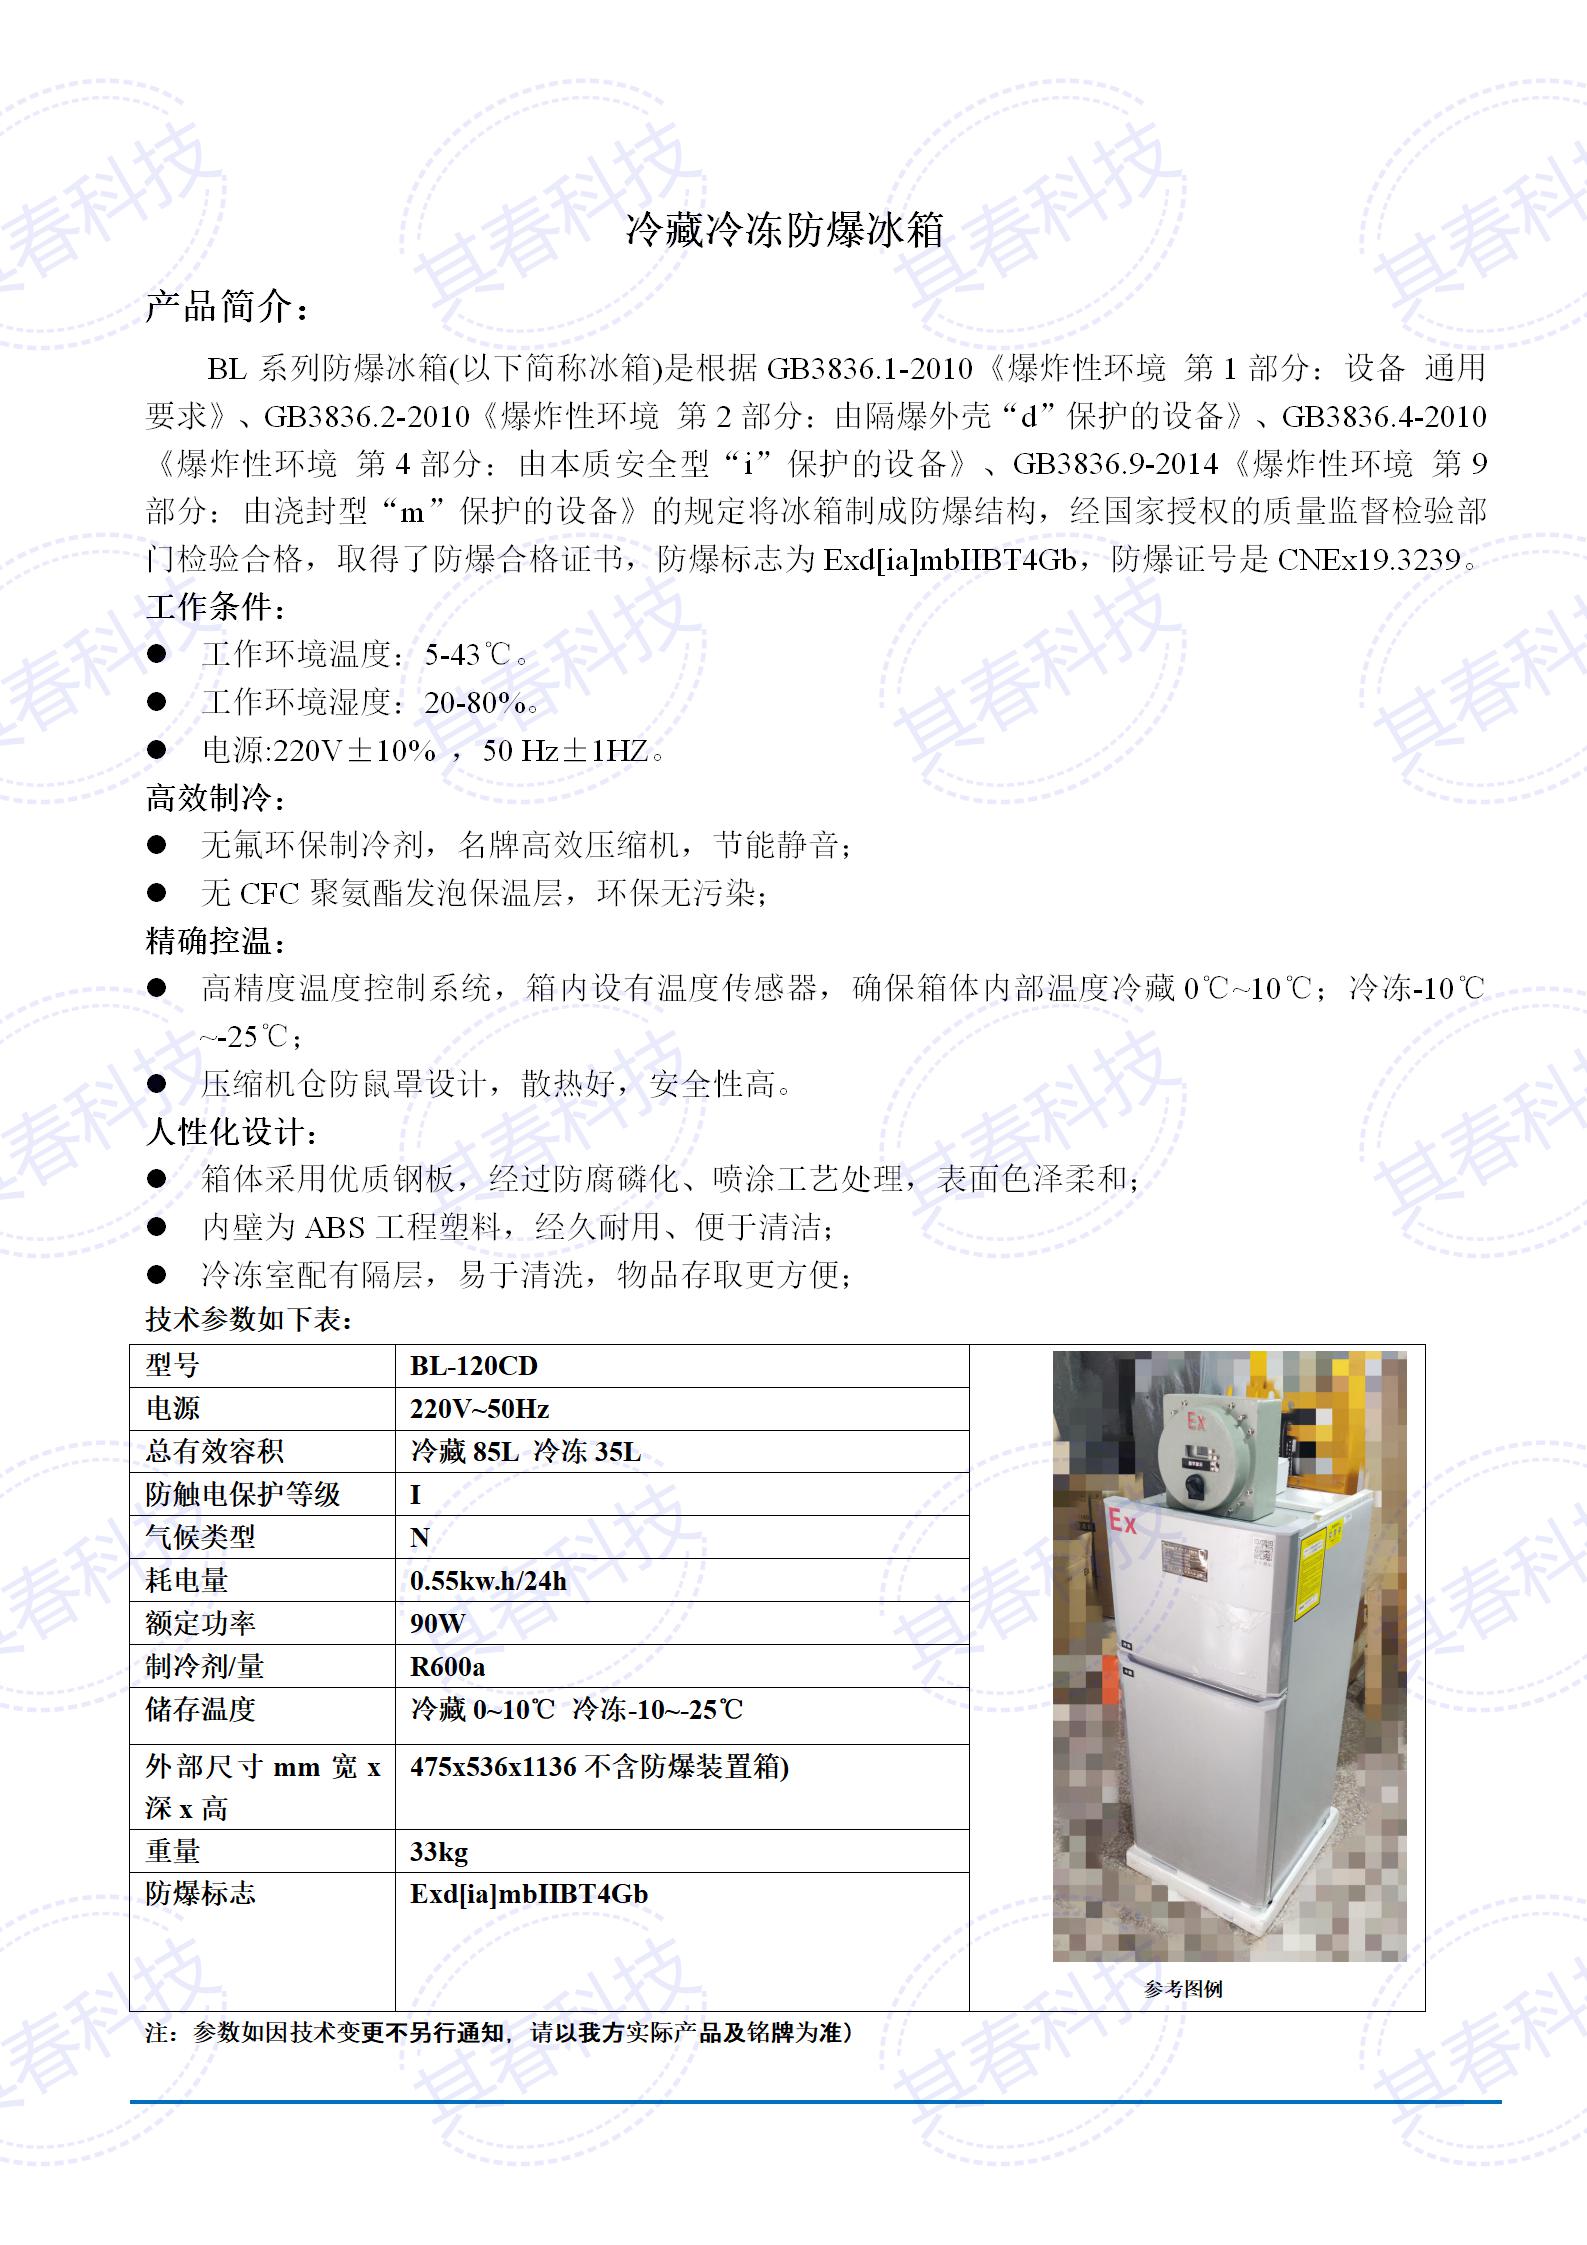 BL-120CD冷藏冷冻防爆冰箱技术参数资料_01.jpg